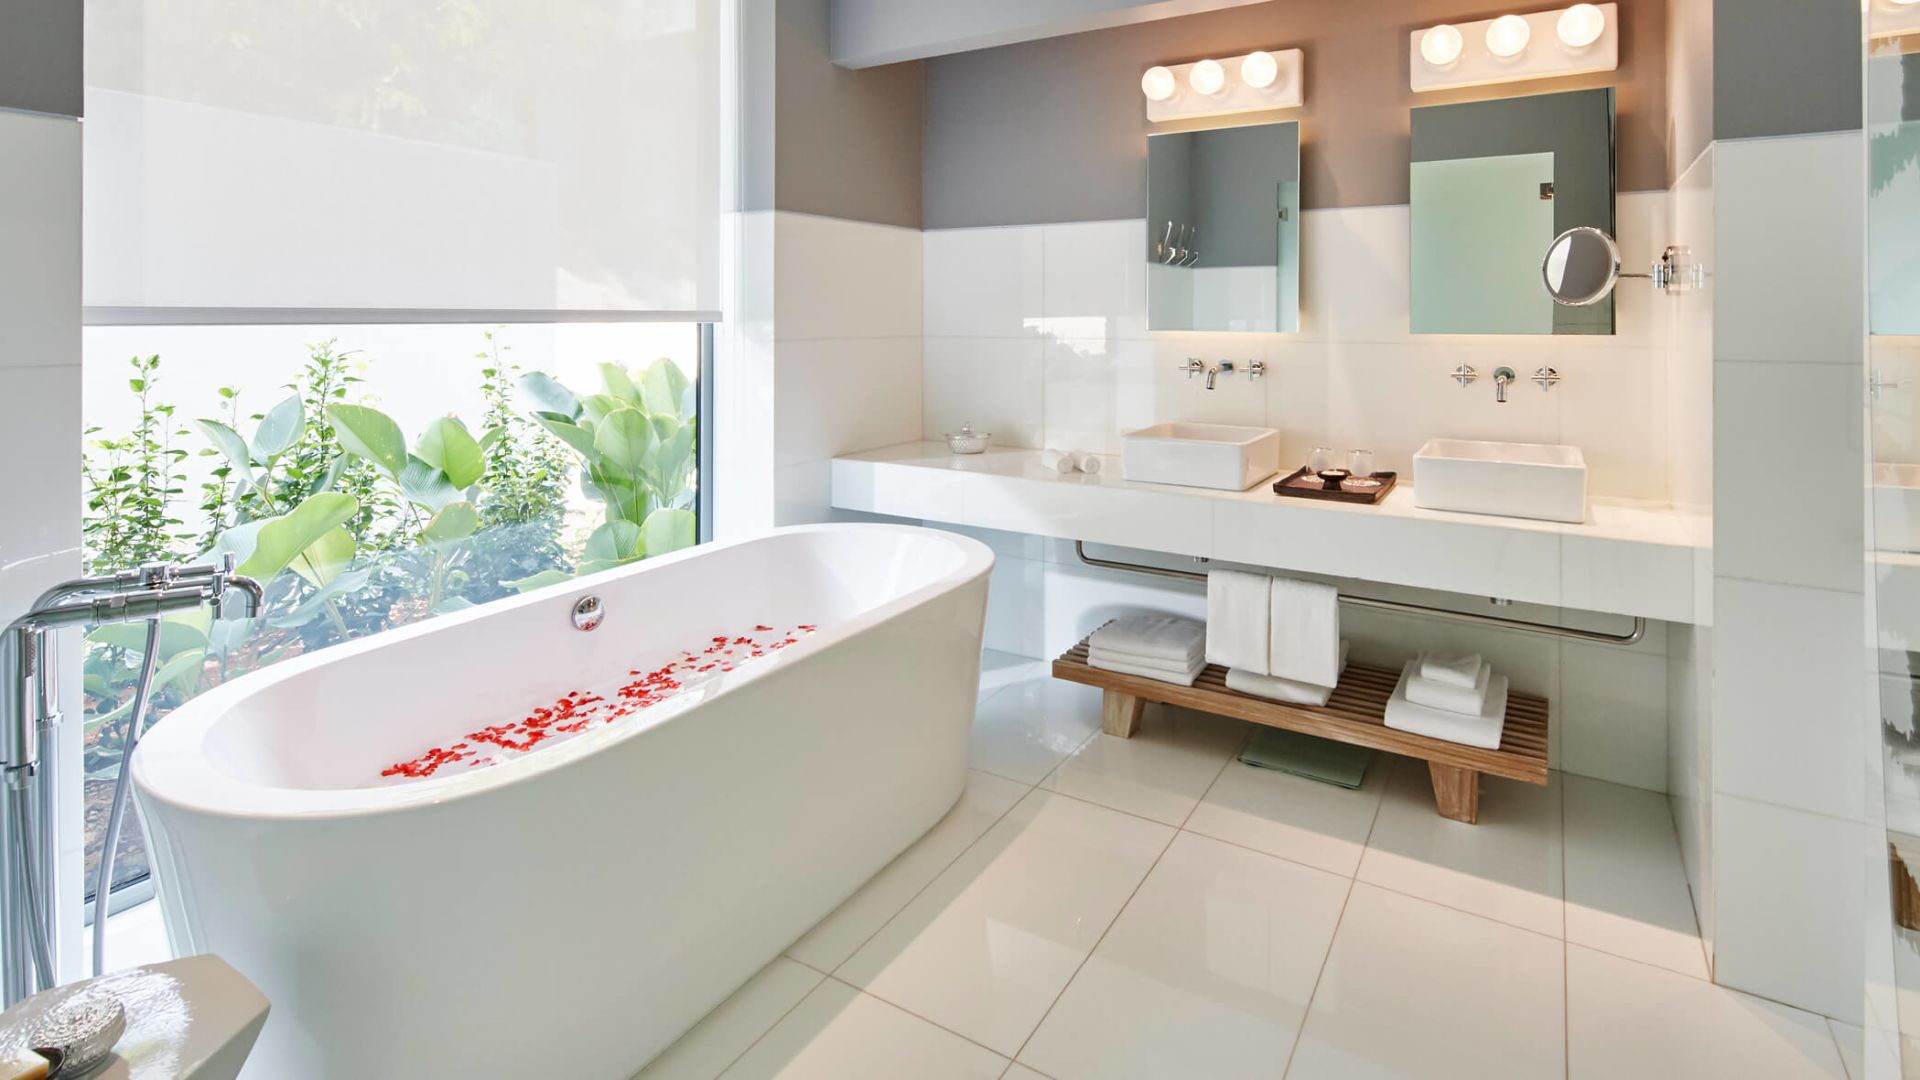 Freestanding bathtub with dual vanity sinks - Image